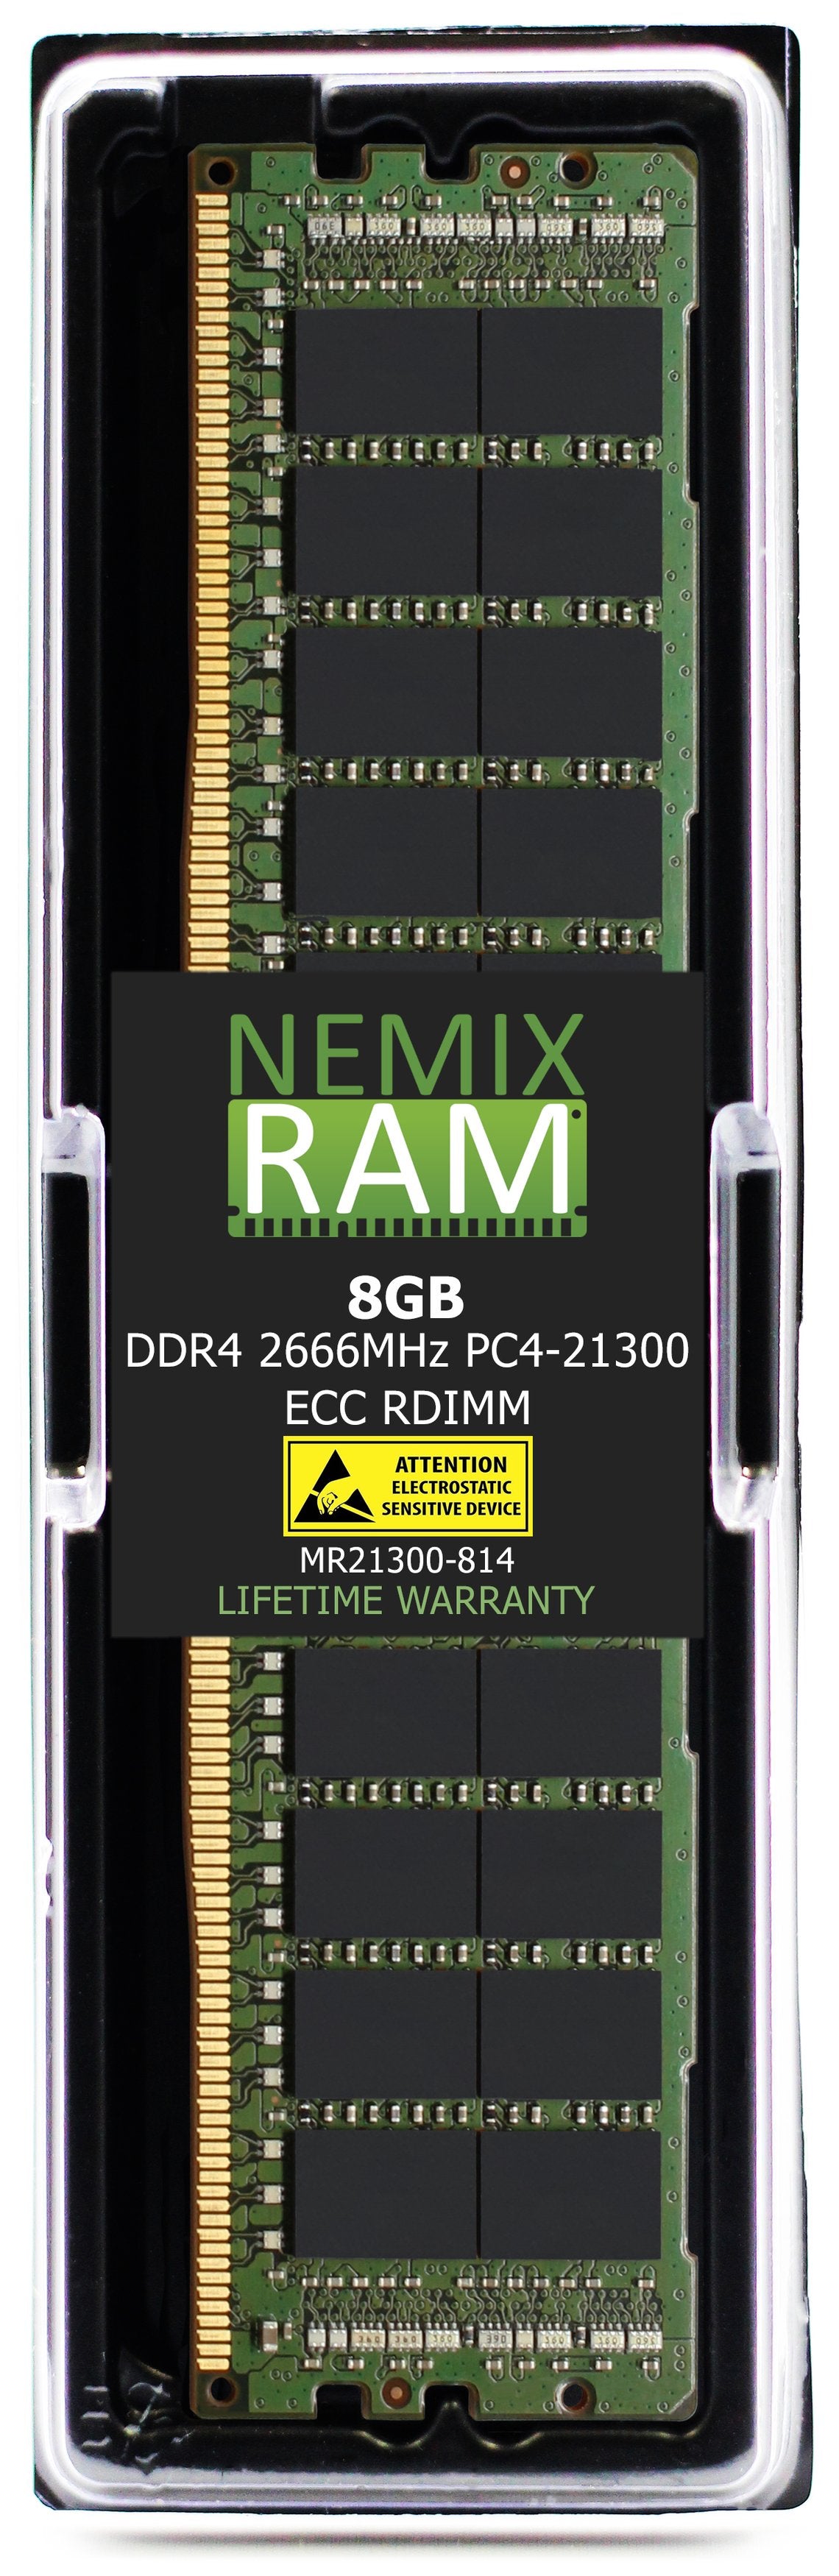 NEC Express5800 D120h Memory Module N8102-703F 8GB DDR4 2666MHZ PC4-21300 RDIMM